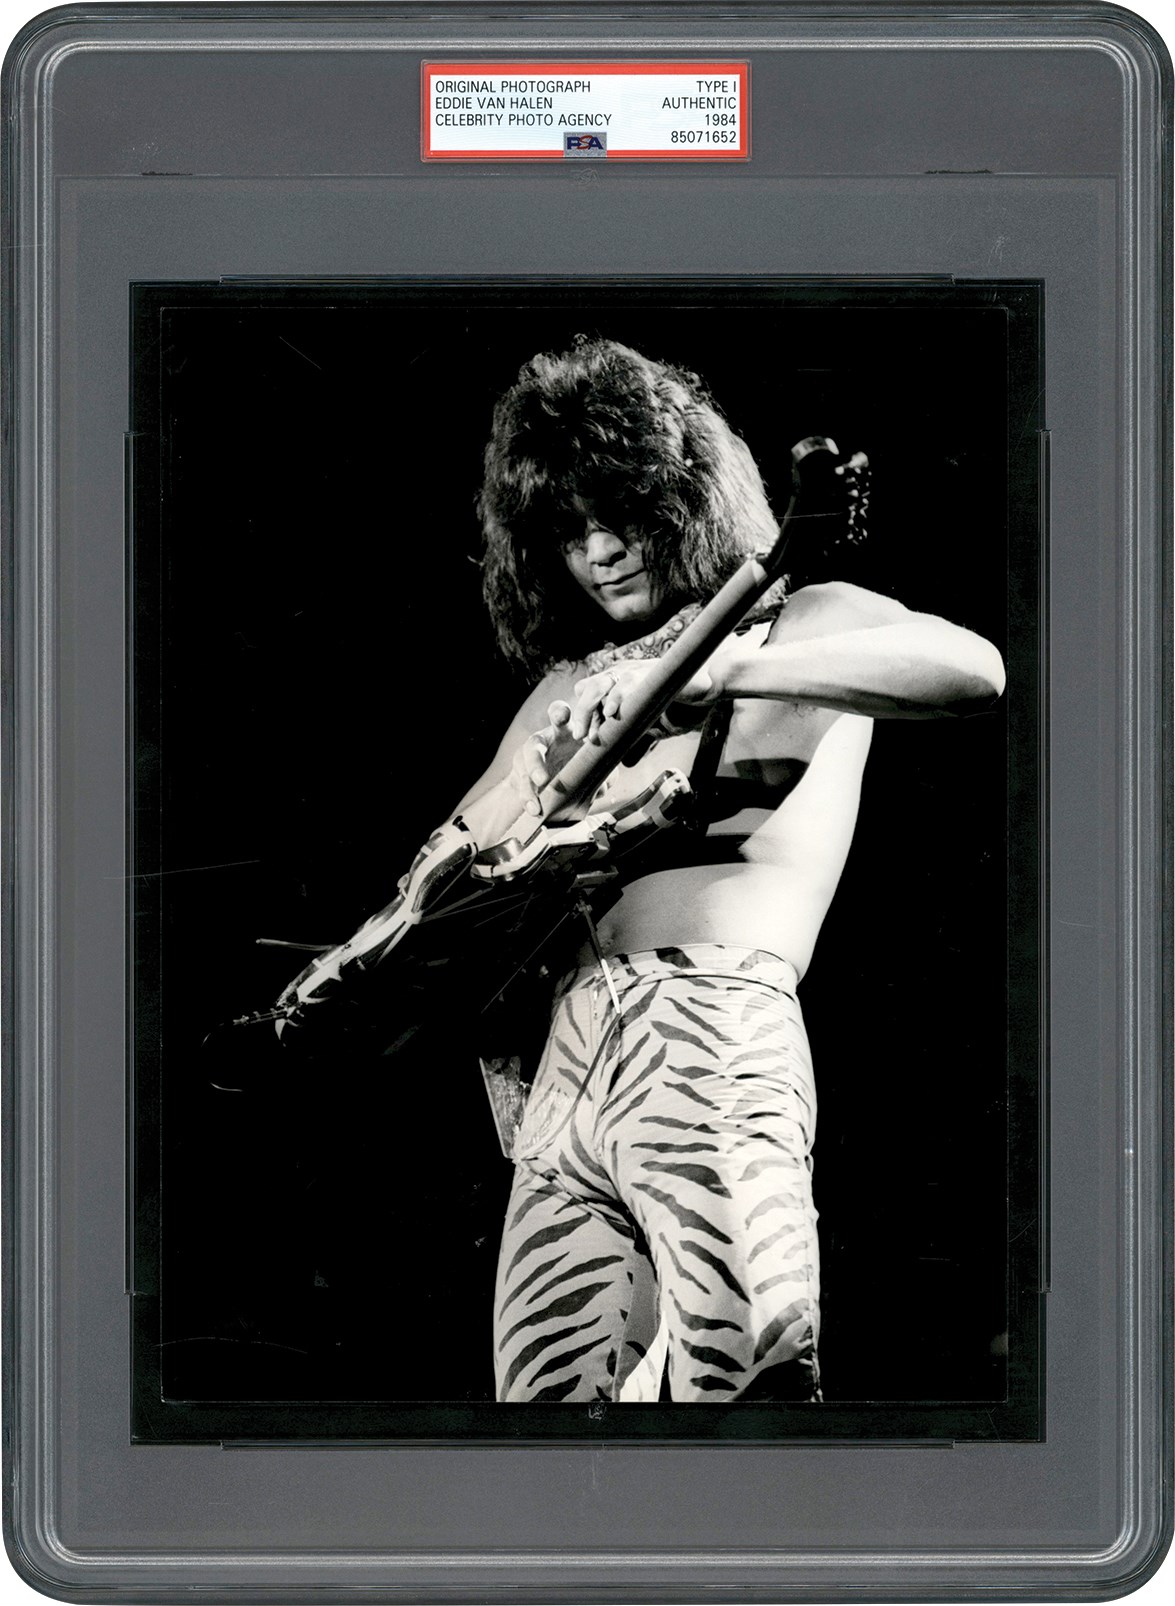 Rock And Pop Culture - 1984 Eddie Van Halen "Eruption Solo" Original Photograph (PSA Type I)